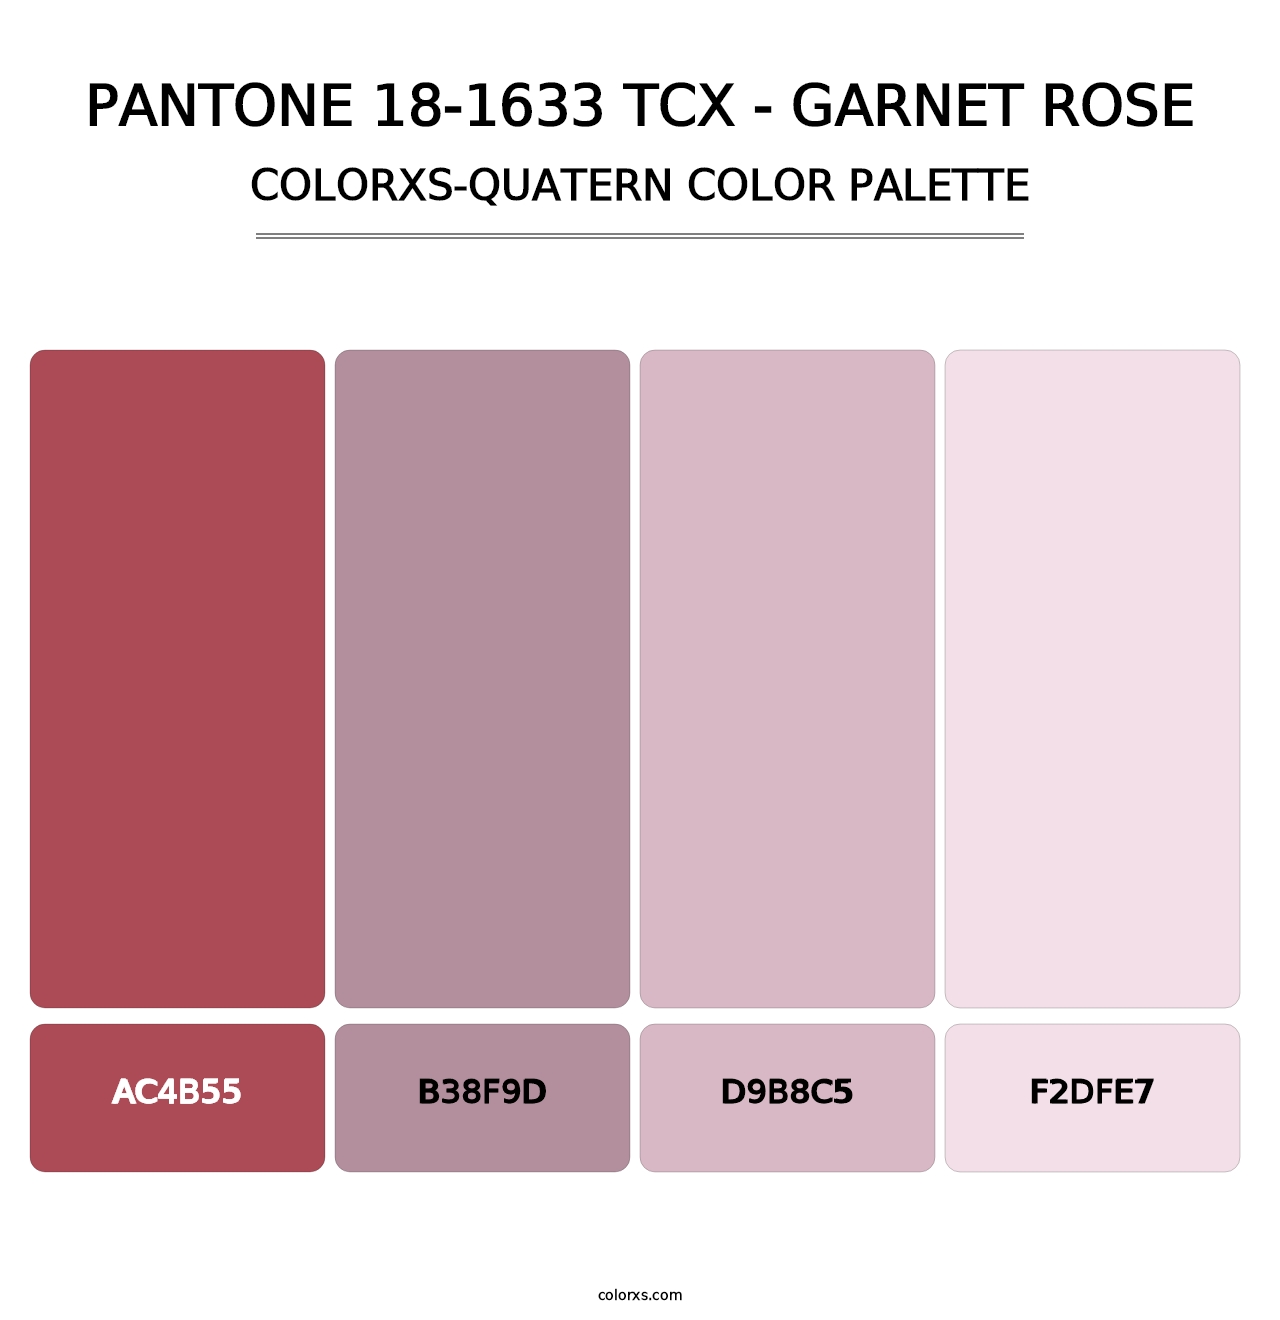 PANTONE 18-1633 TCX - Garnet Rose - Colorxs Quatern Palette